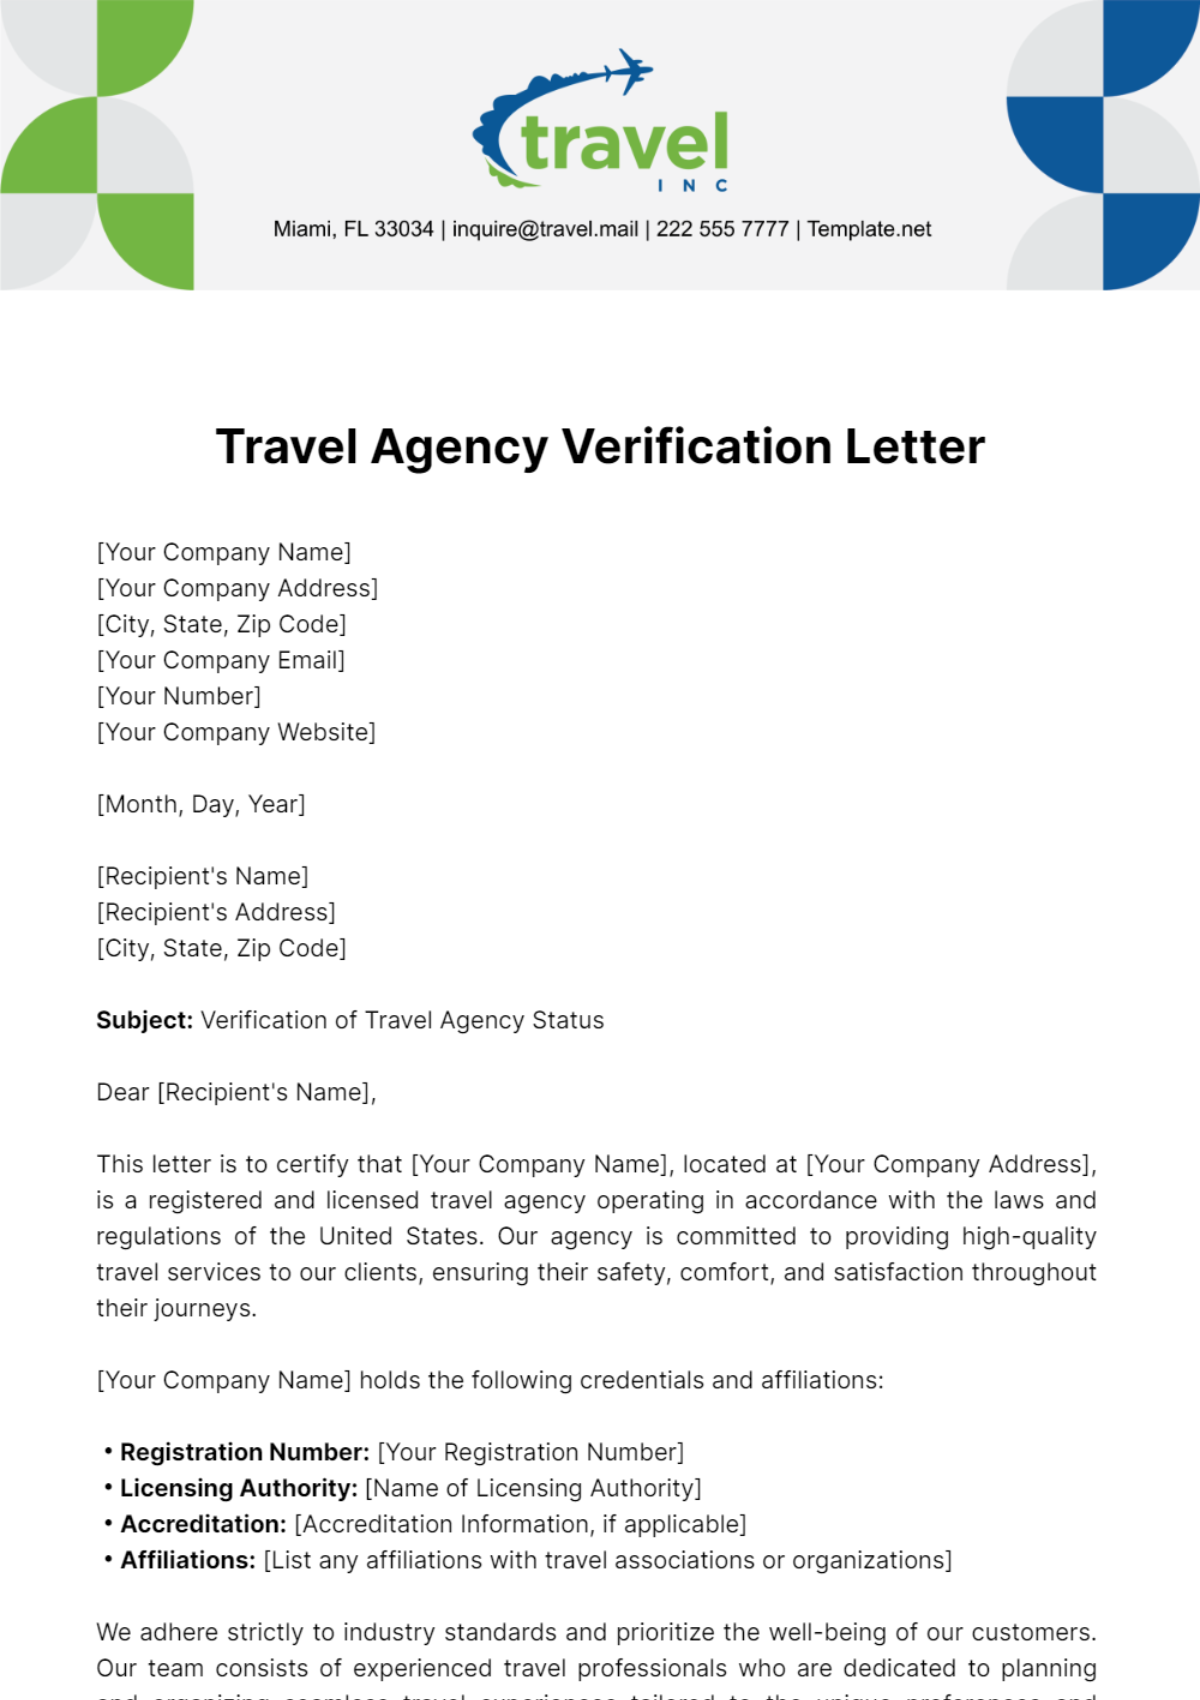 Travel Agency Verification Letter Template